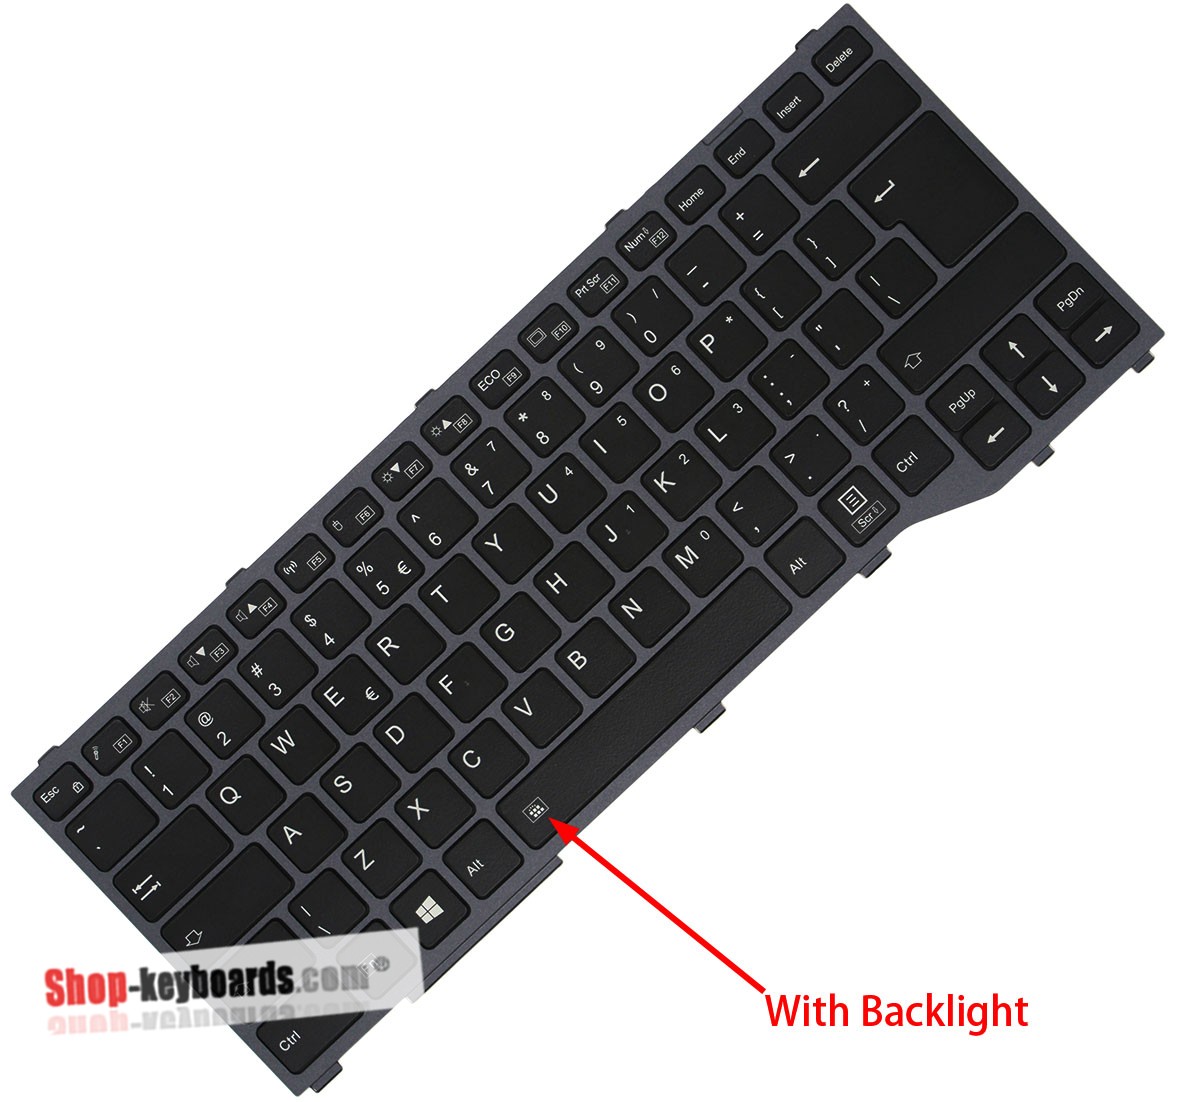 Fujitsu Lifebook T939 Keyboard replacement